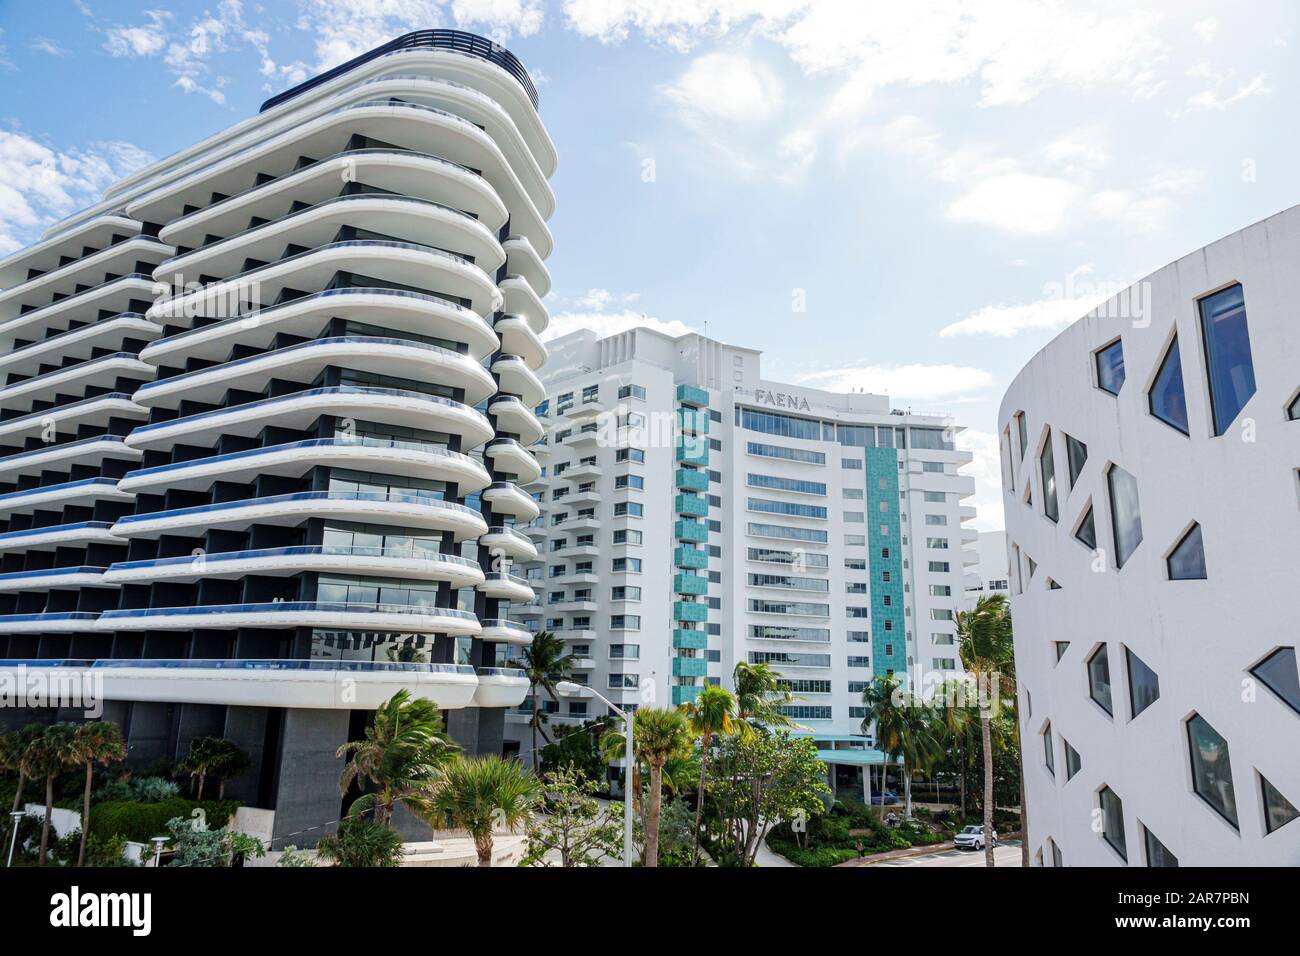 Miami Beach Florida,Collins Avenue,Faena District Forum,cultural neighborhood,events performance venue,residential luxury condominium,high rise,contem Stock Photo